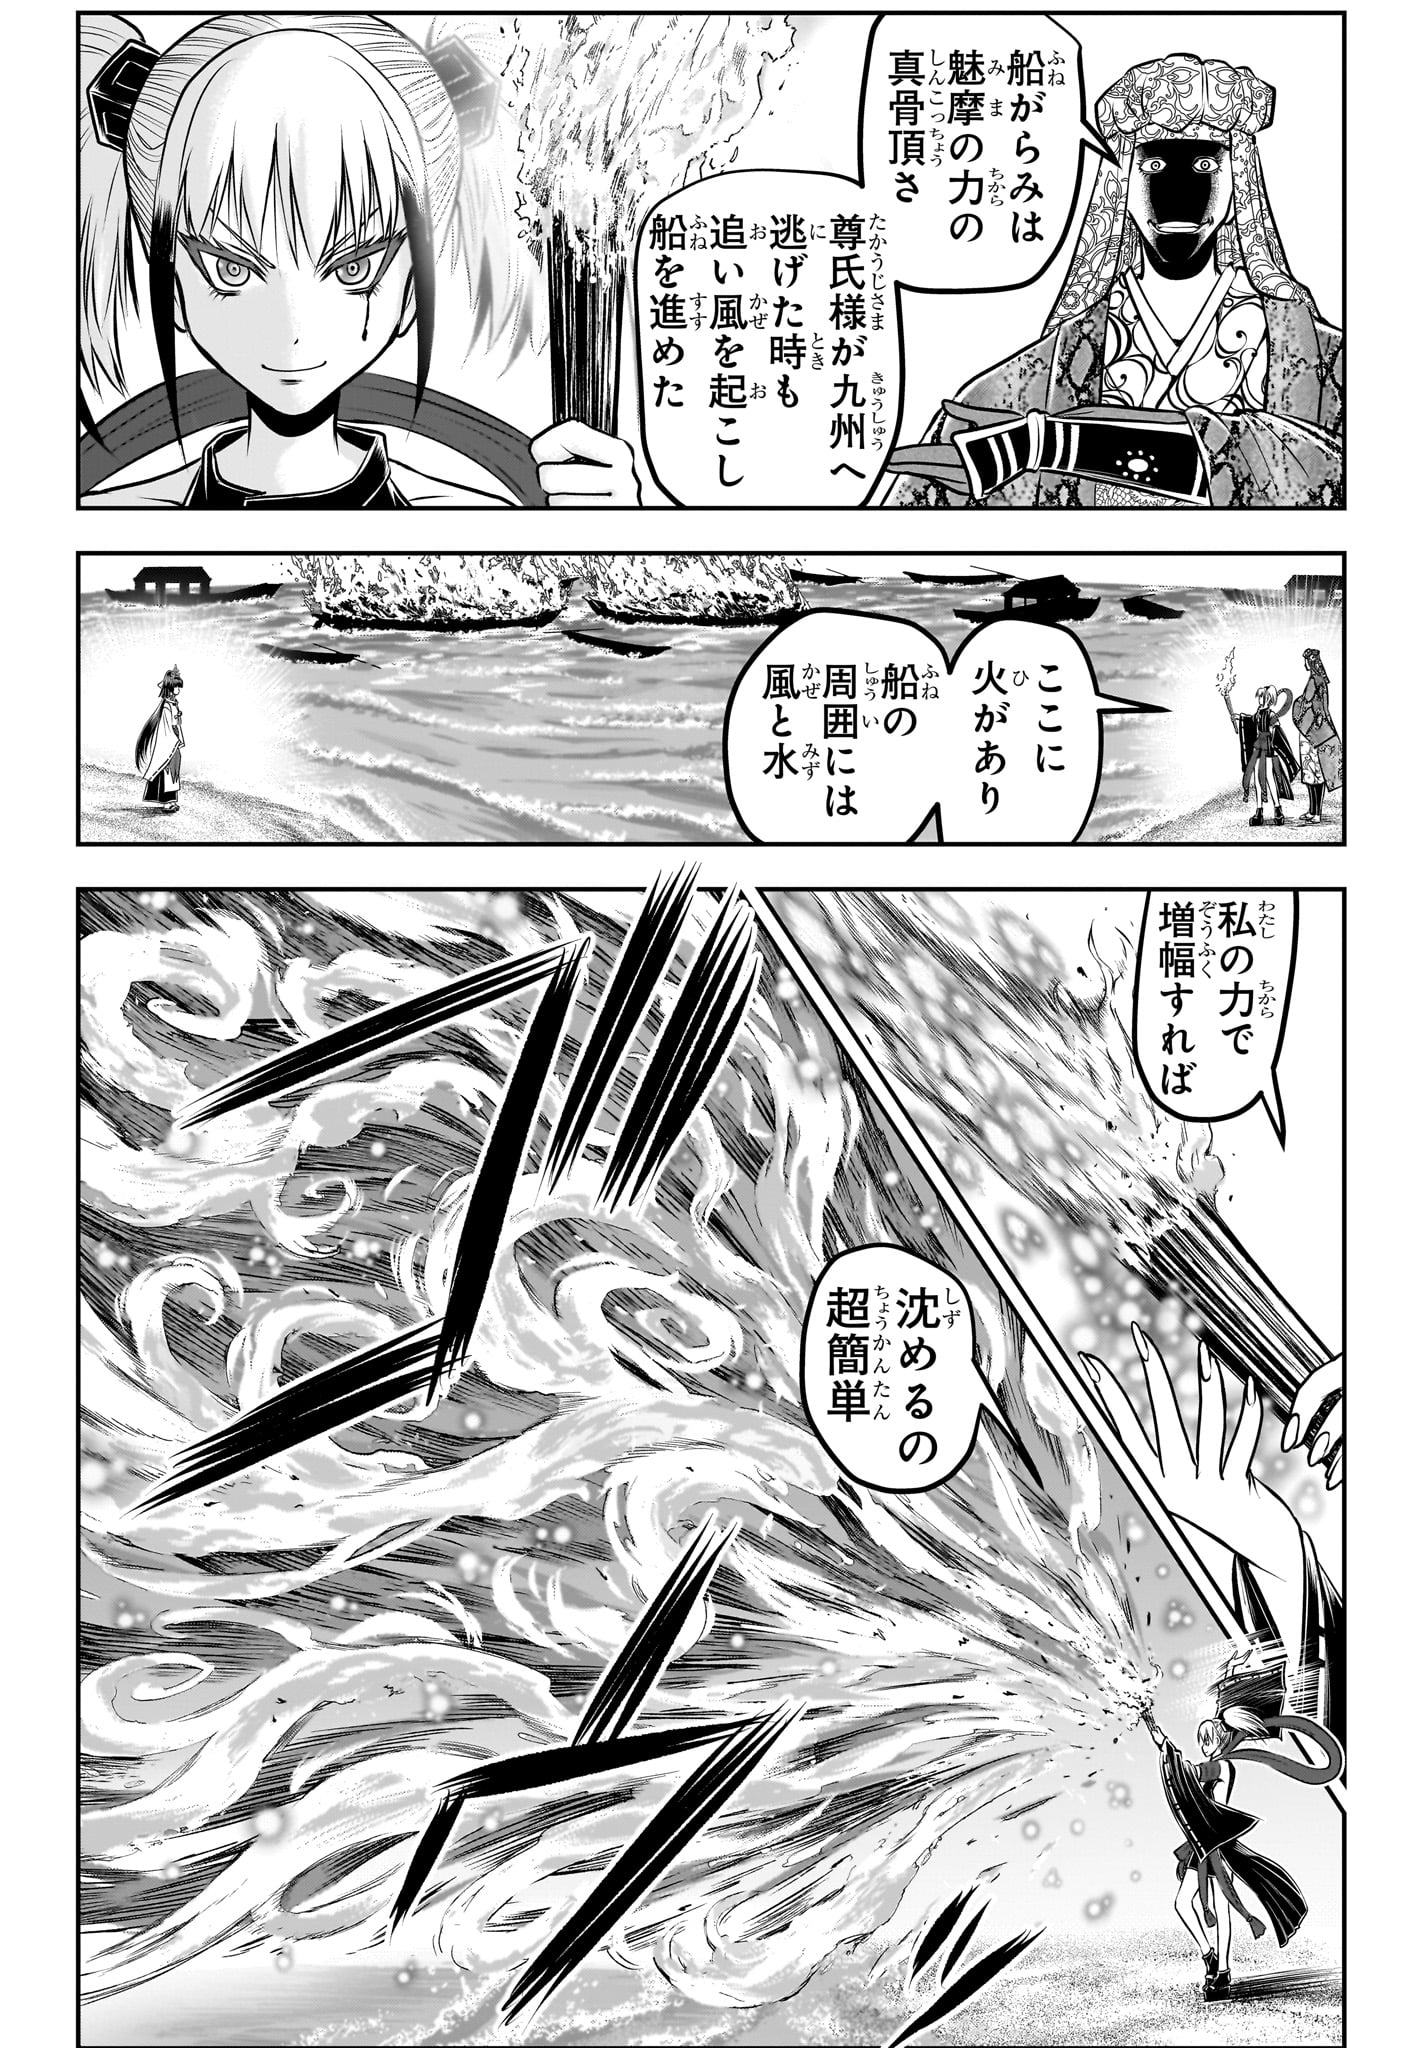 Nige Jouzu no Wakagimi - Chapter 157 - Page 14